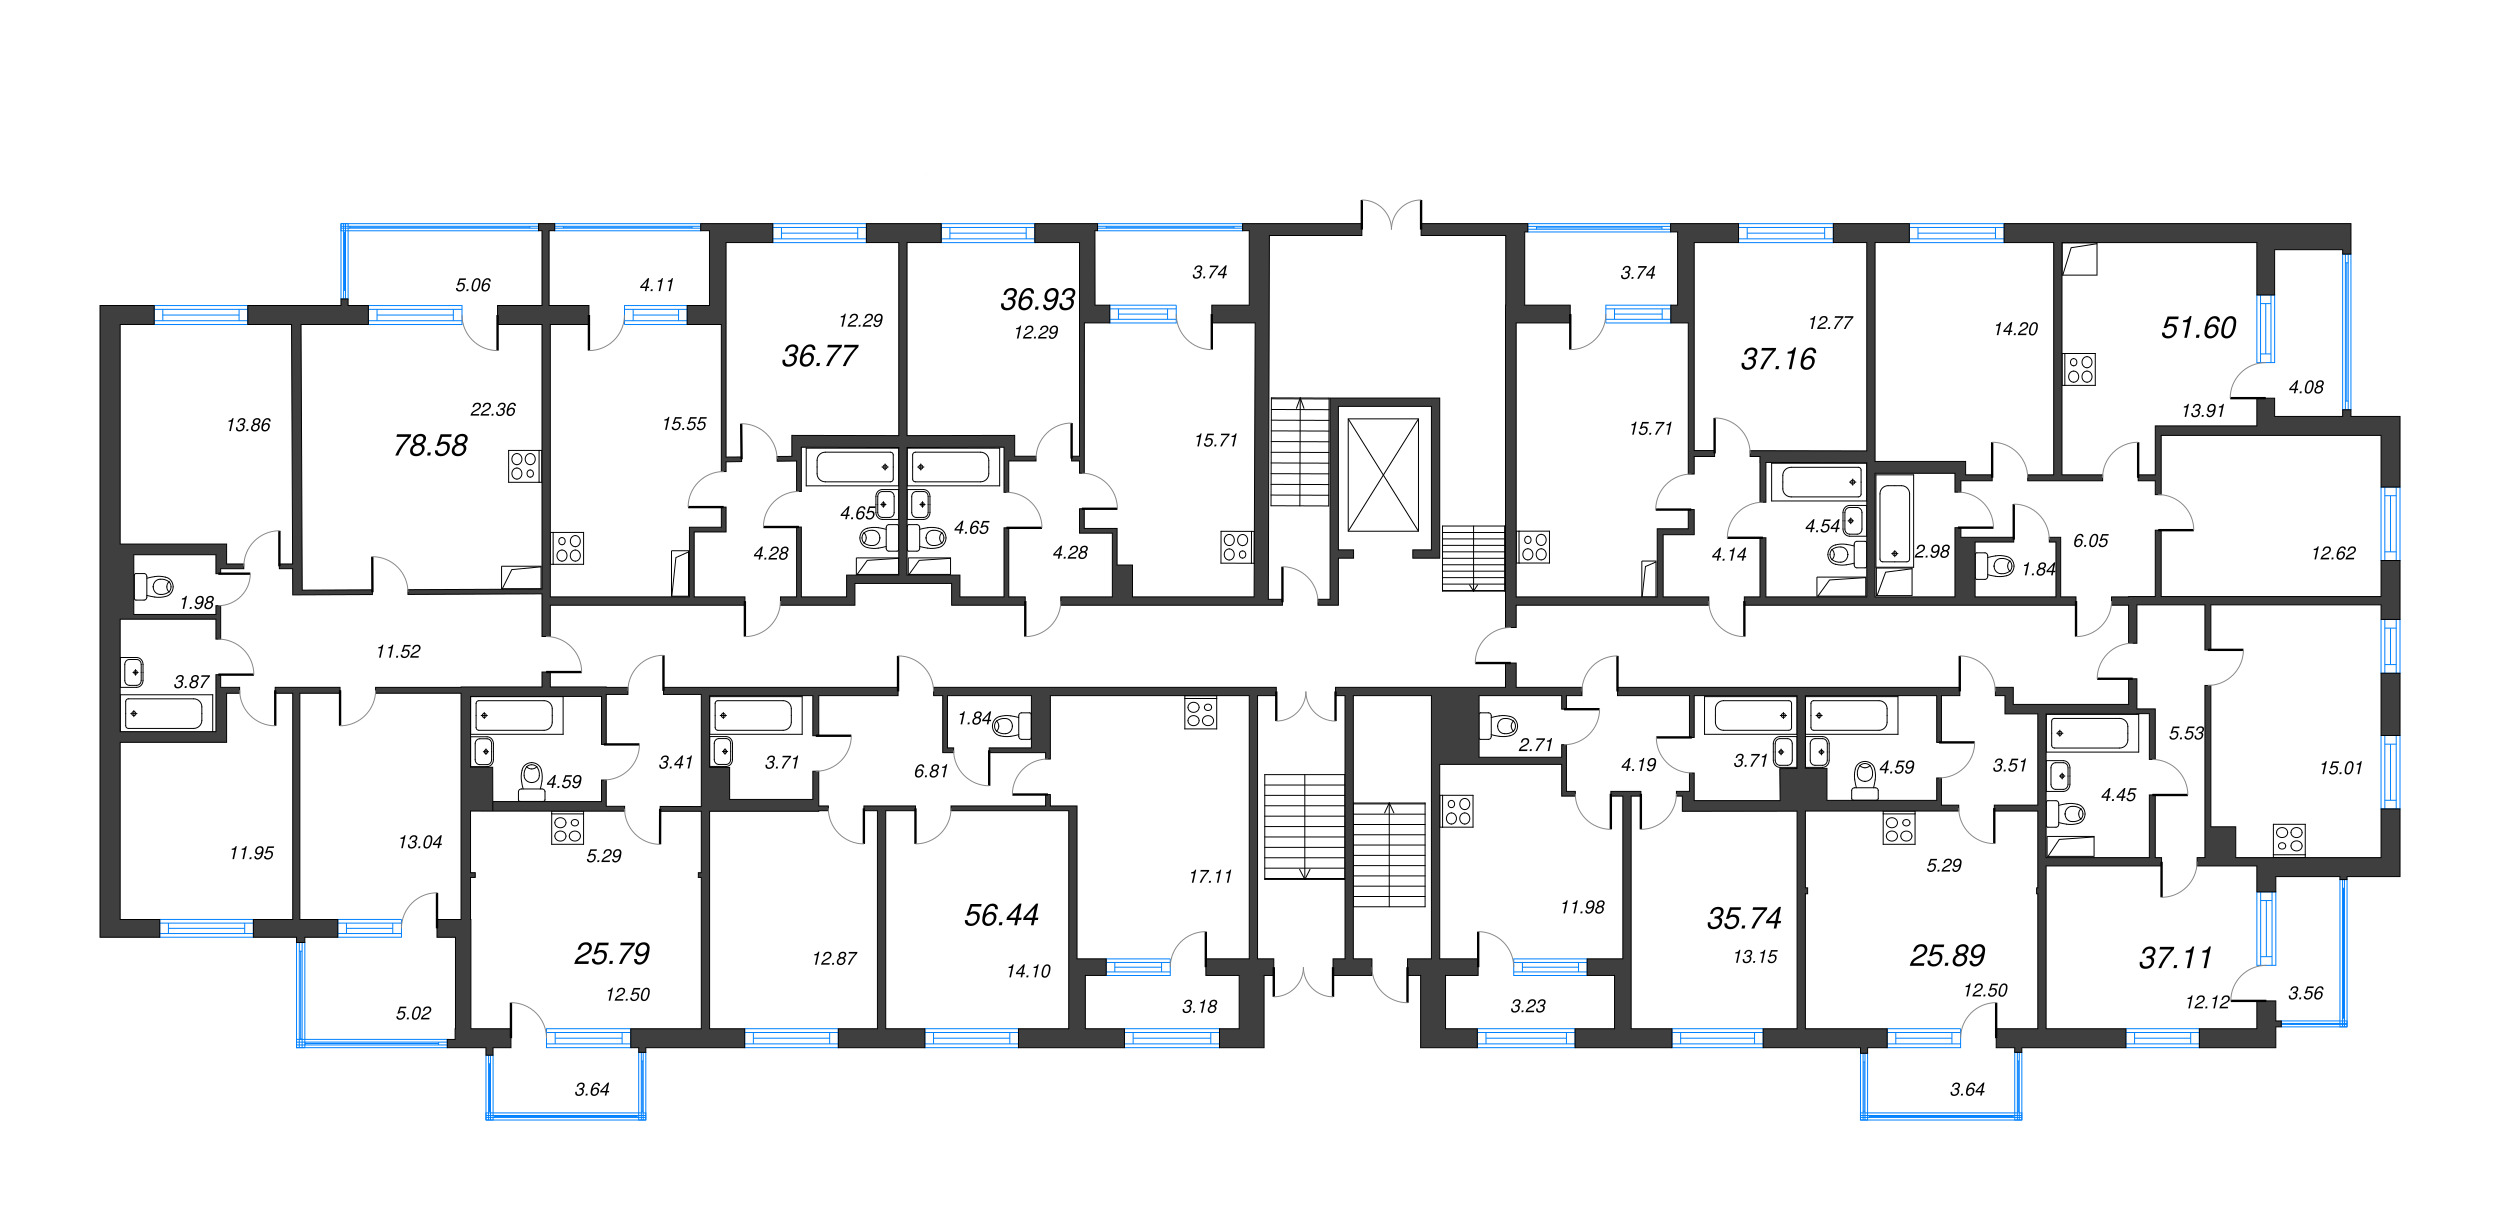 2-комнатная (Евро) квартира, 36.77 м² - планировка этажа